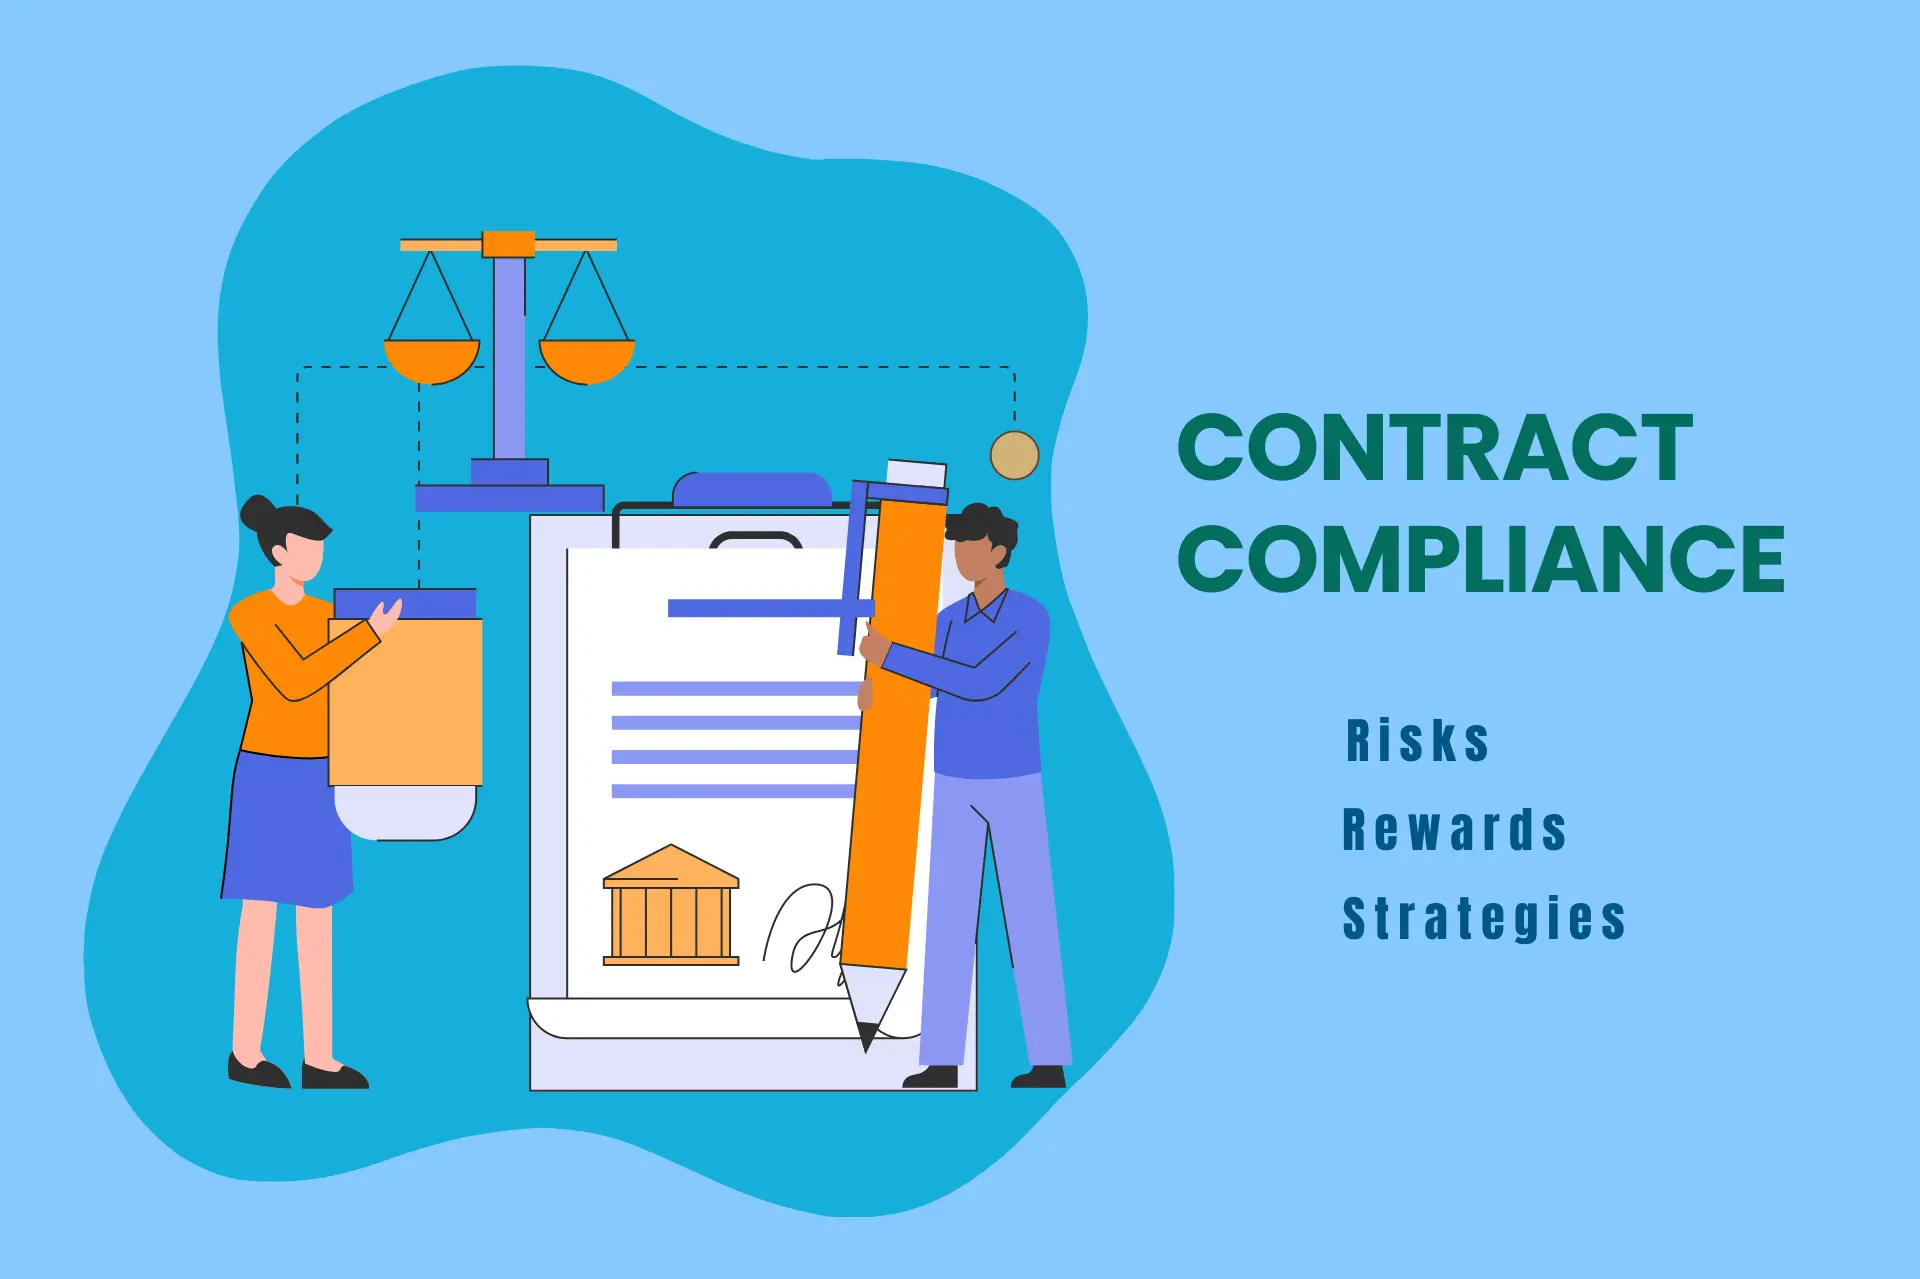 Ensuring Contract Compliance Risks, Rewards, & Strategies